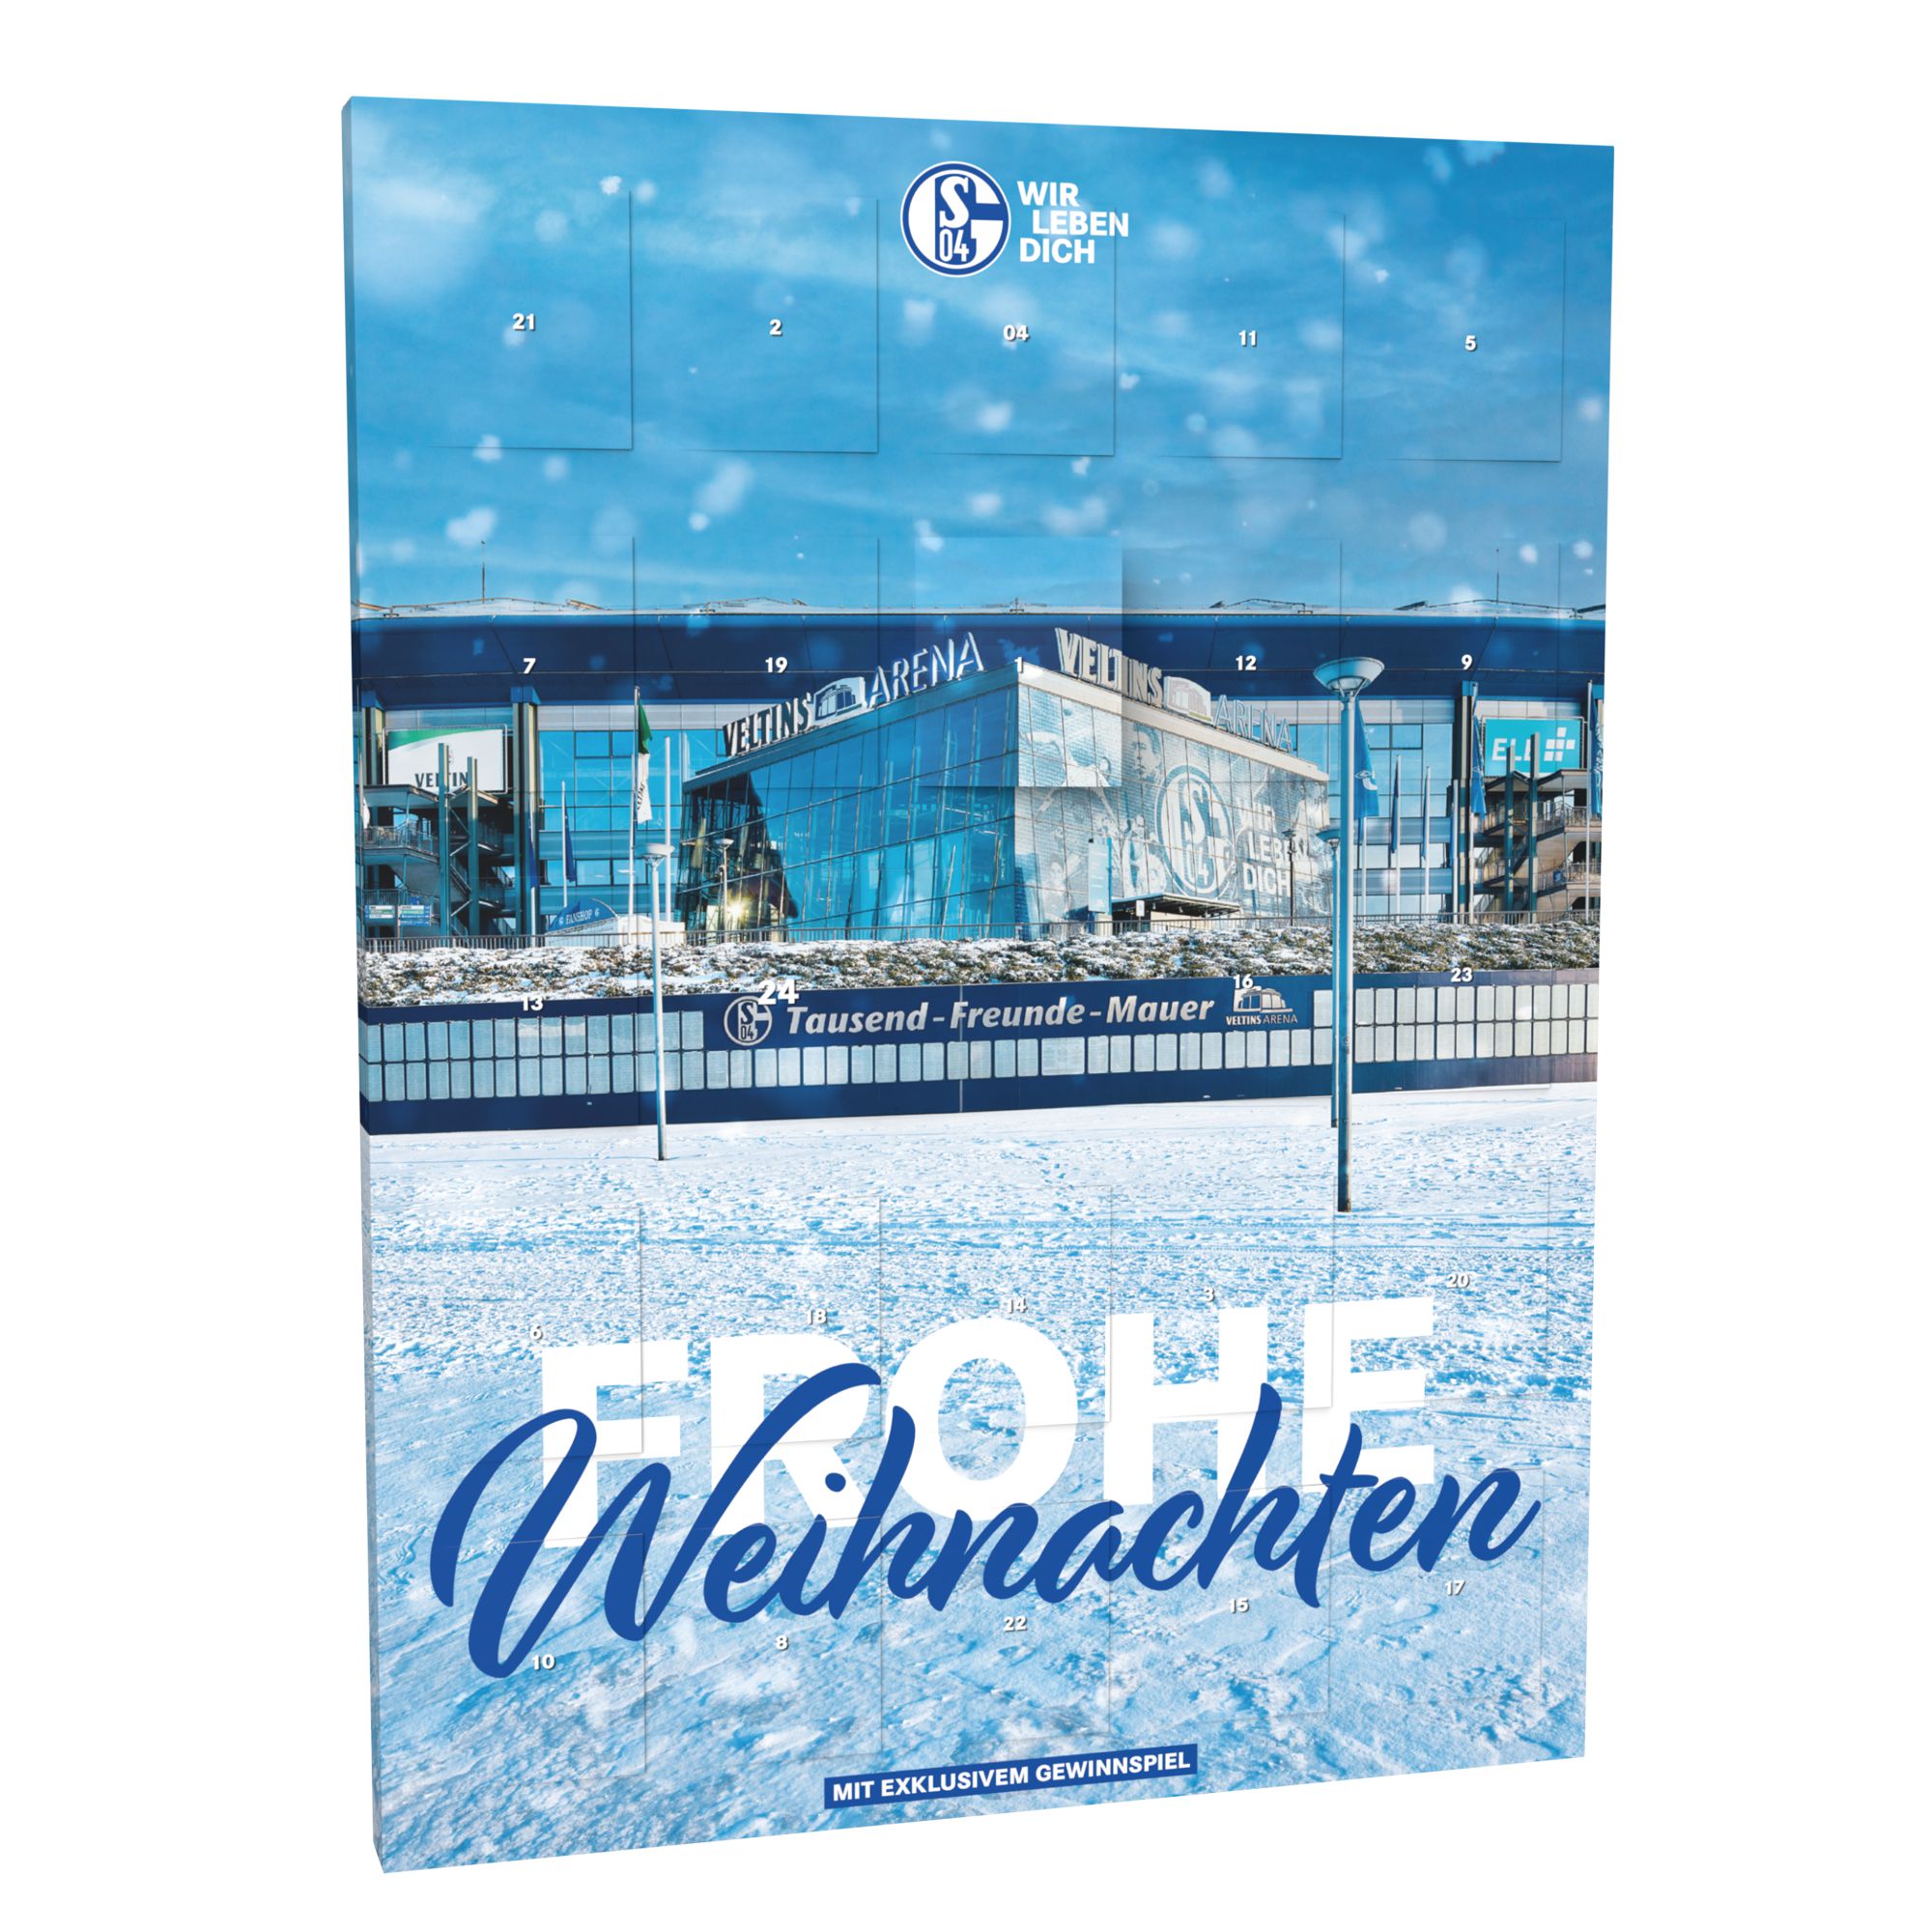 Schalke04-Adventskalender 2021